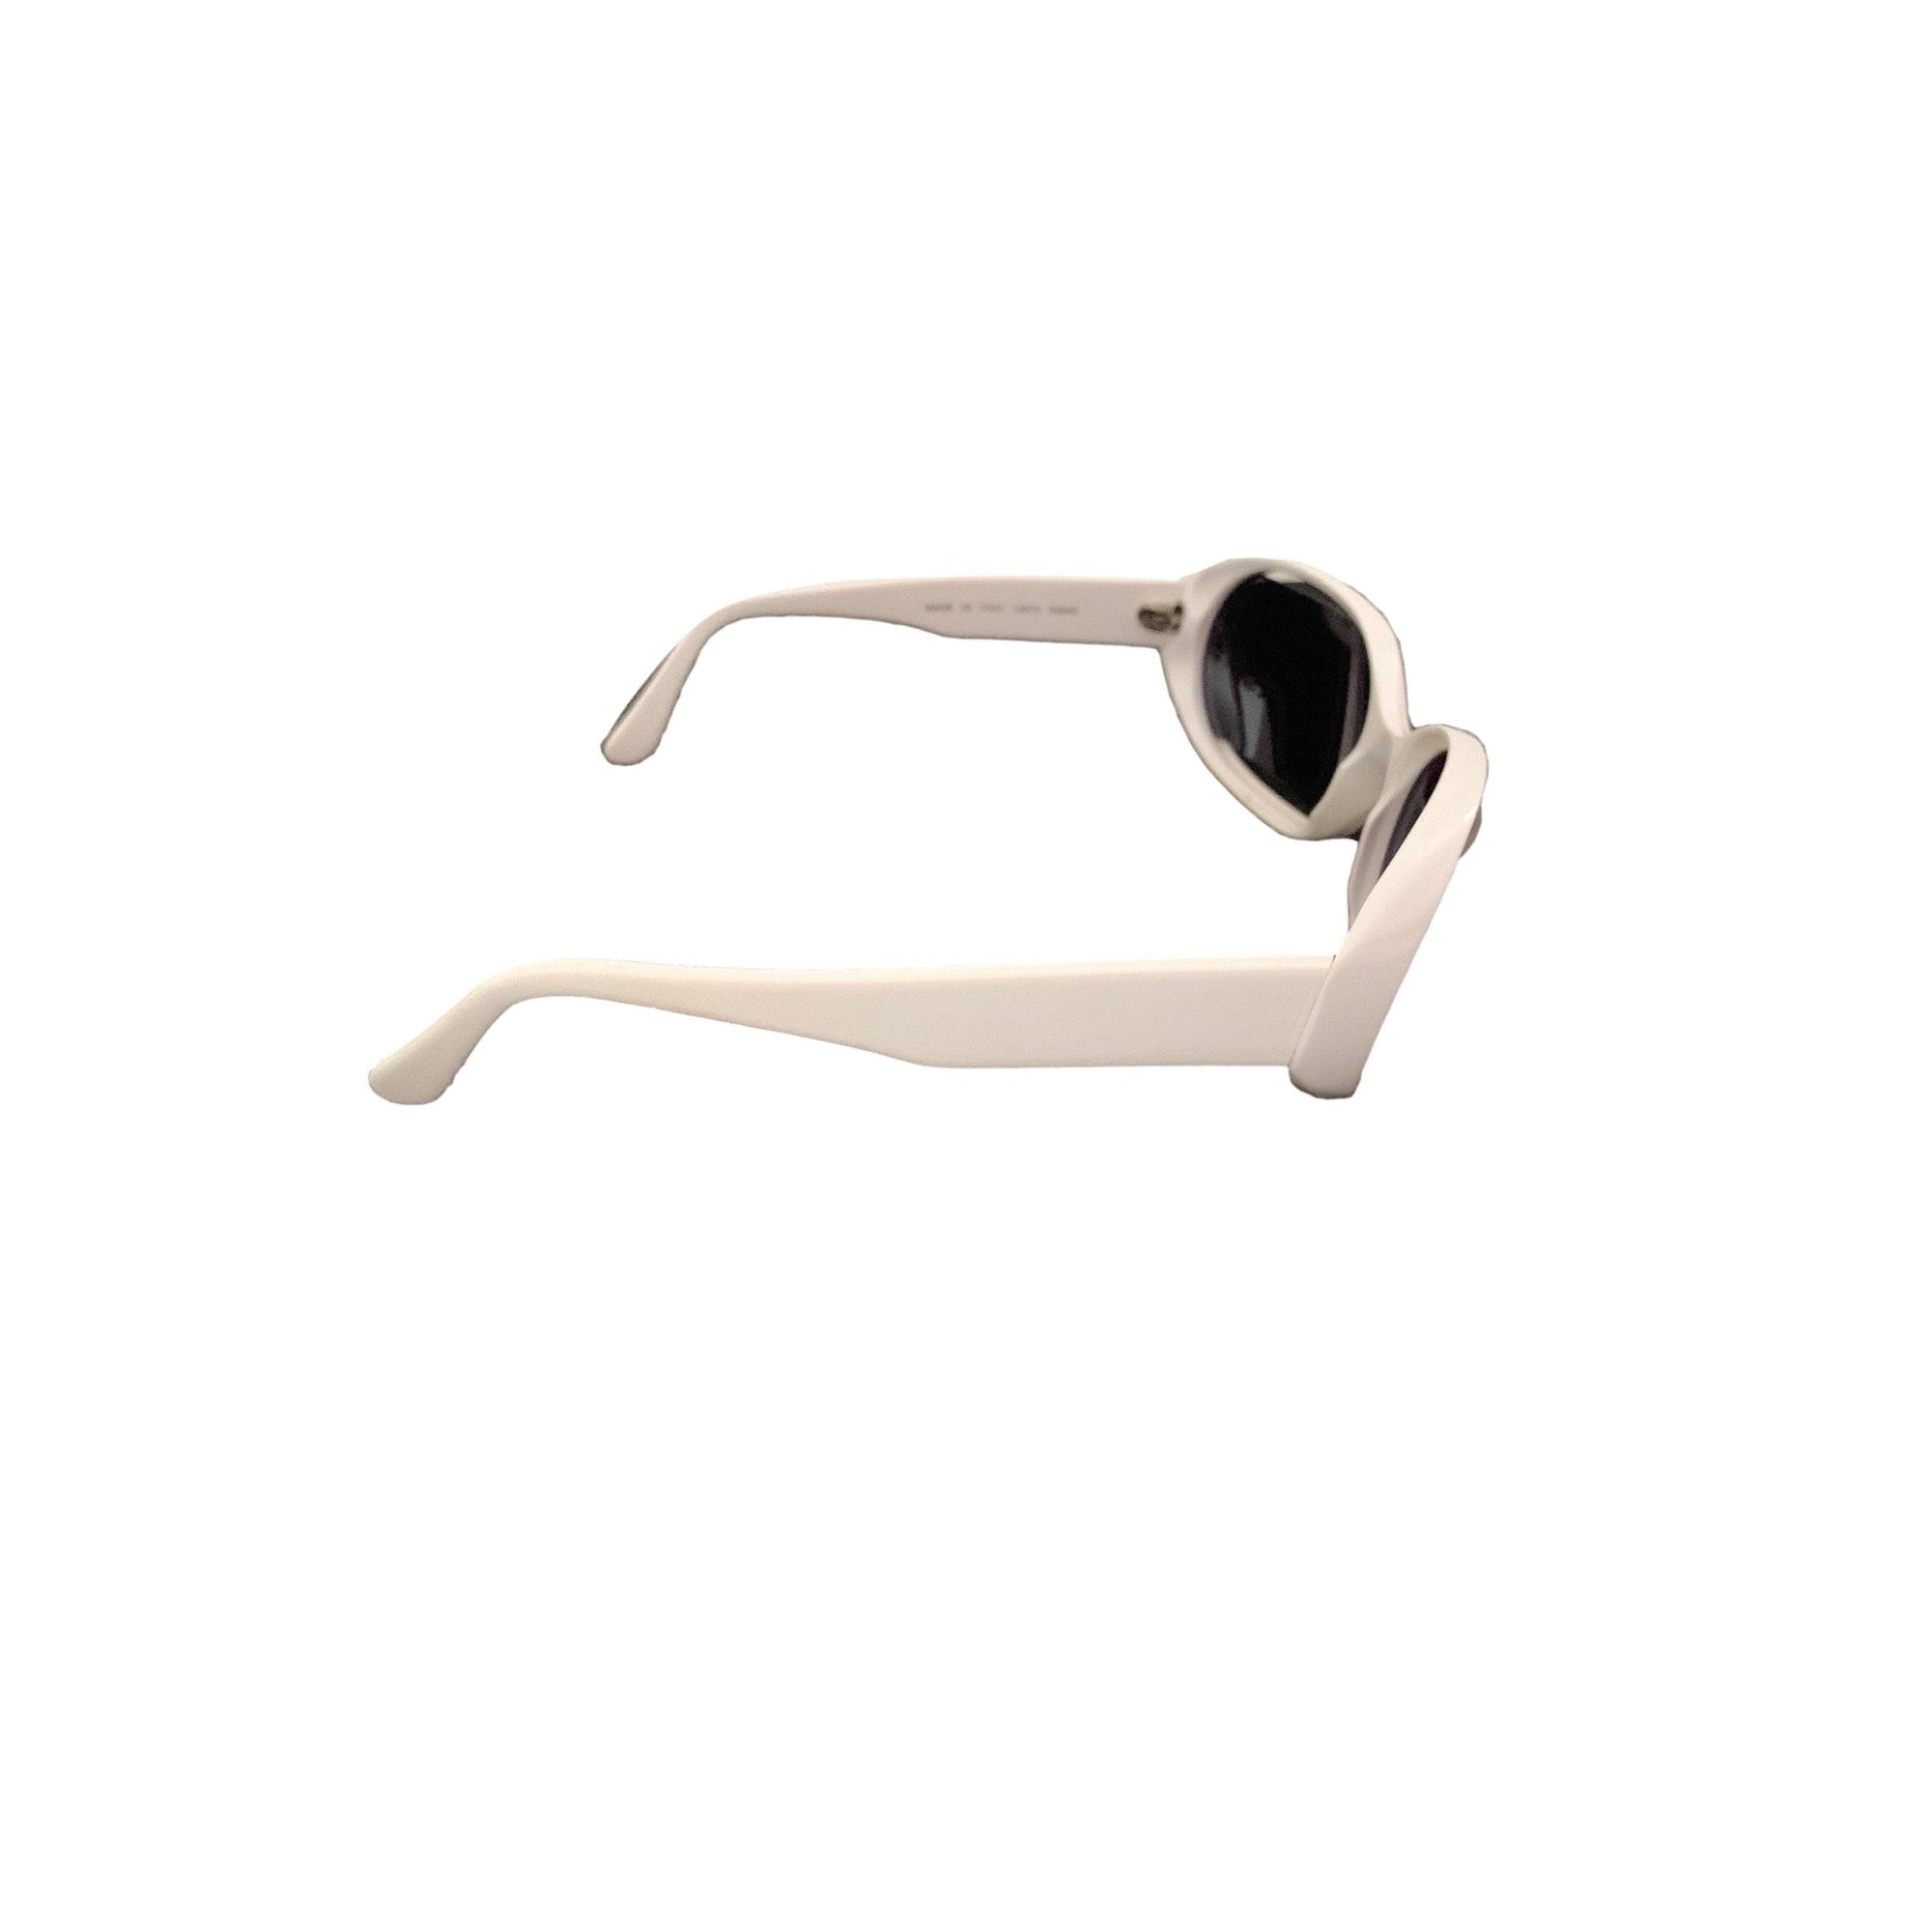 Chanel White Cut Out Sunglasses - Sunglasses